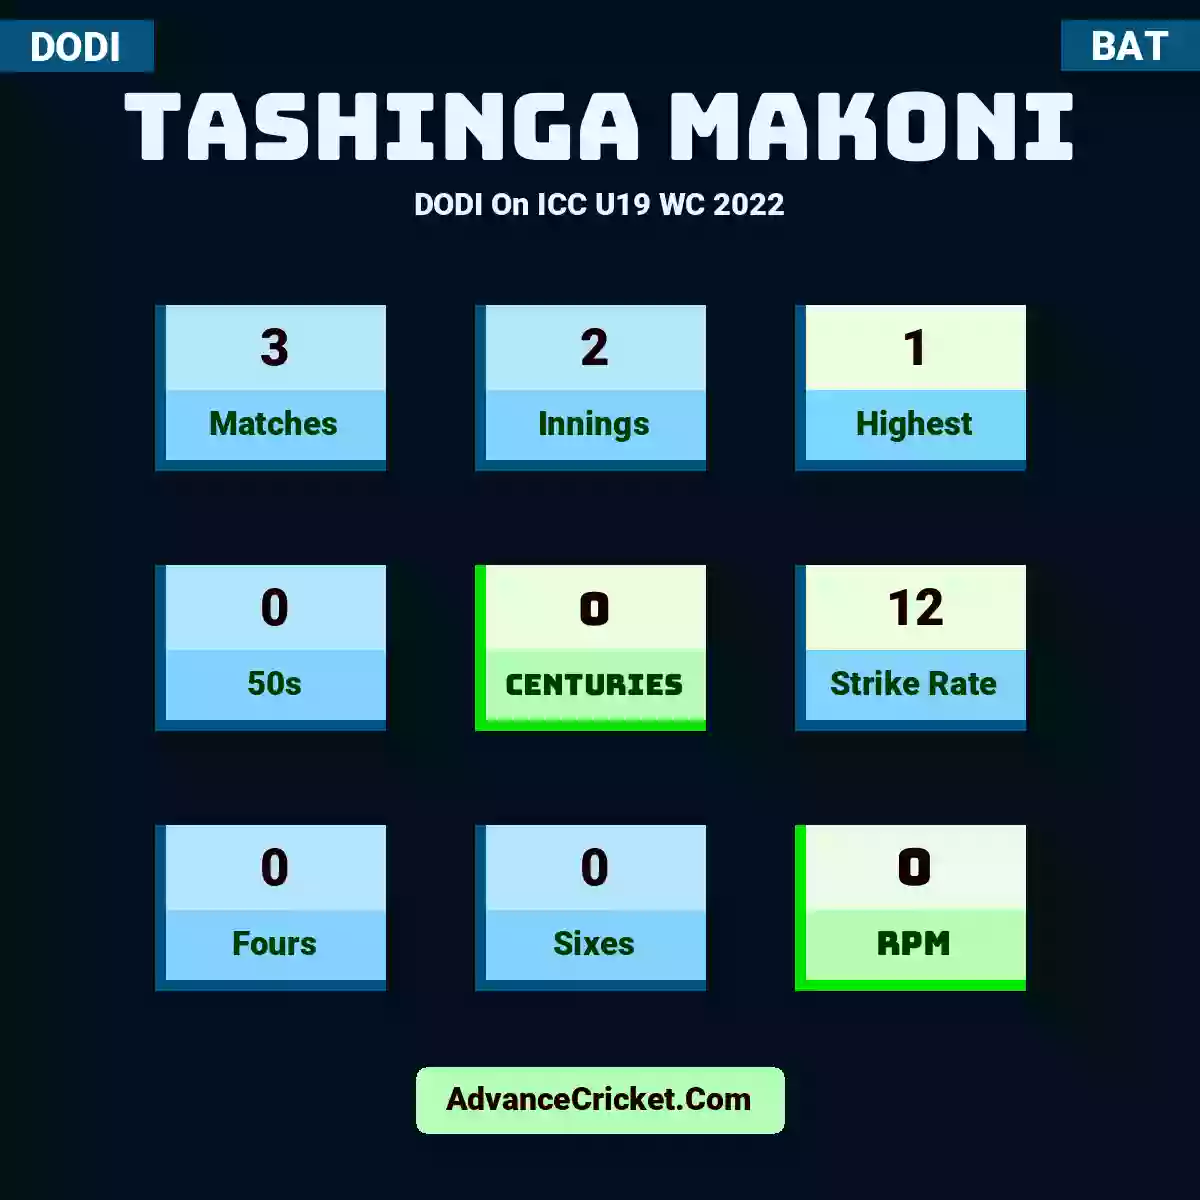 Tashinga Makoni DODI  On ICC U19 WC 2022, Tashinga Makoni played 3 matches, scored 1 runs as highest, 0 half-centuries, and 0 centuries, with a strike rate of 12. T.Makoni hit 0 fours and 0 sixes, with an RPM of 0.